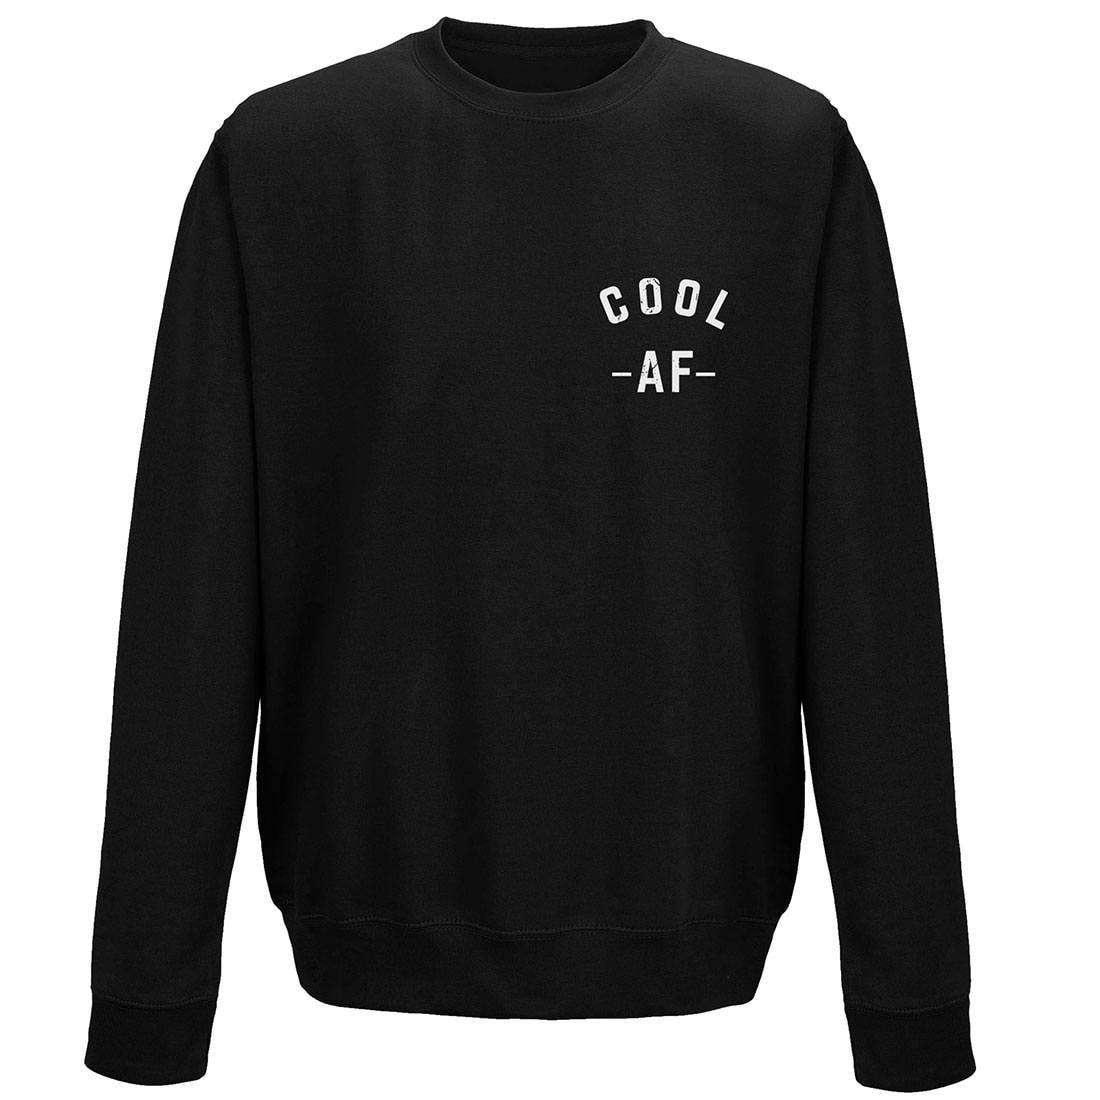 Cool AF Sweatshirt For Men and Women 8Ball